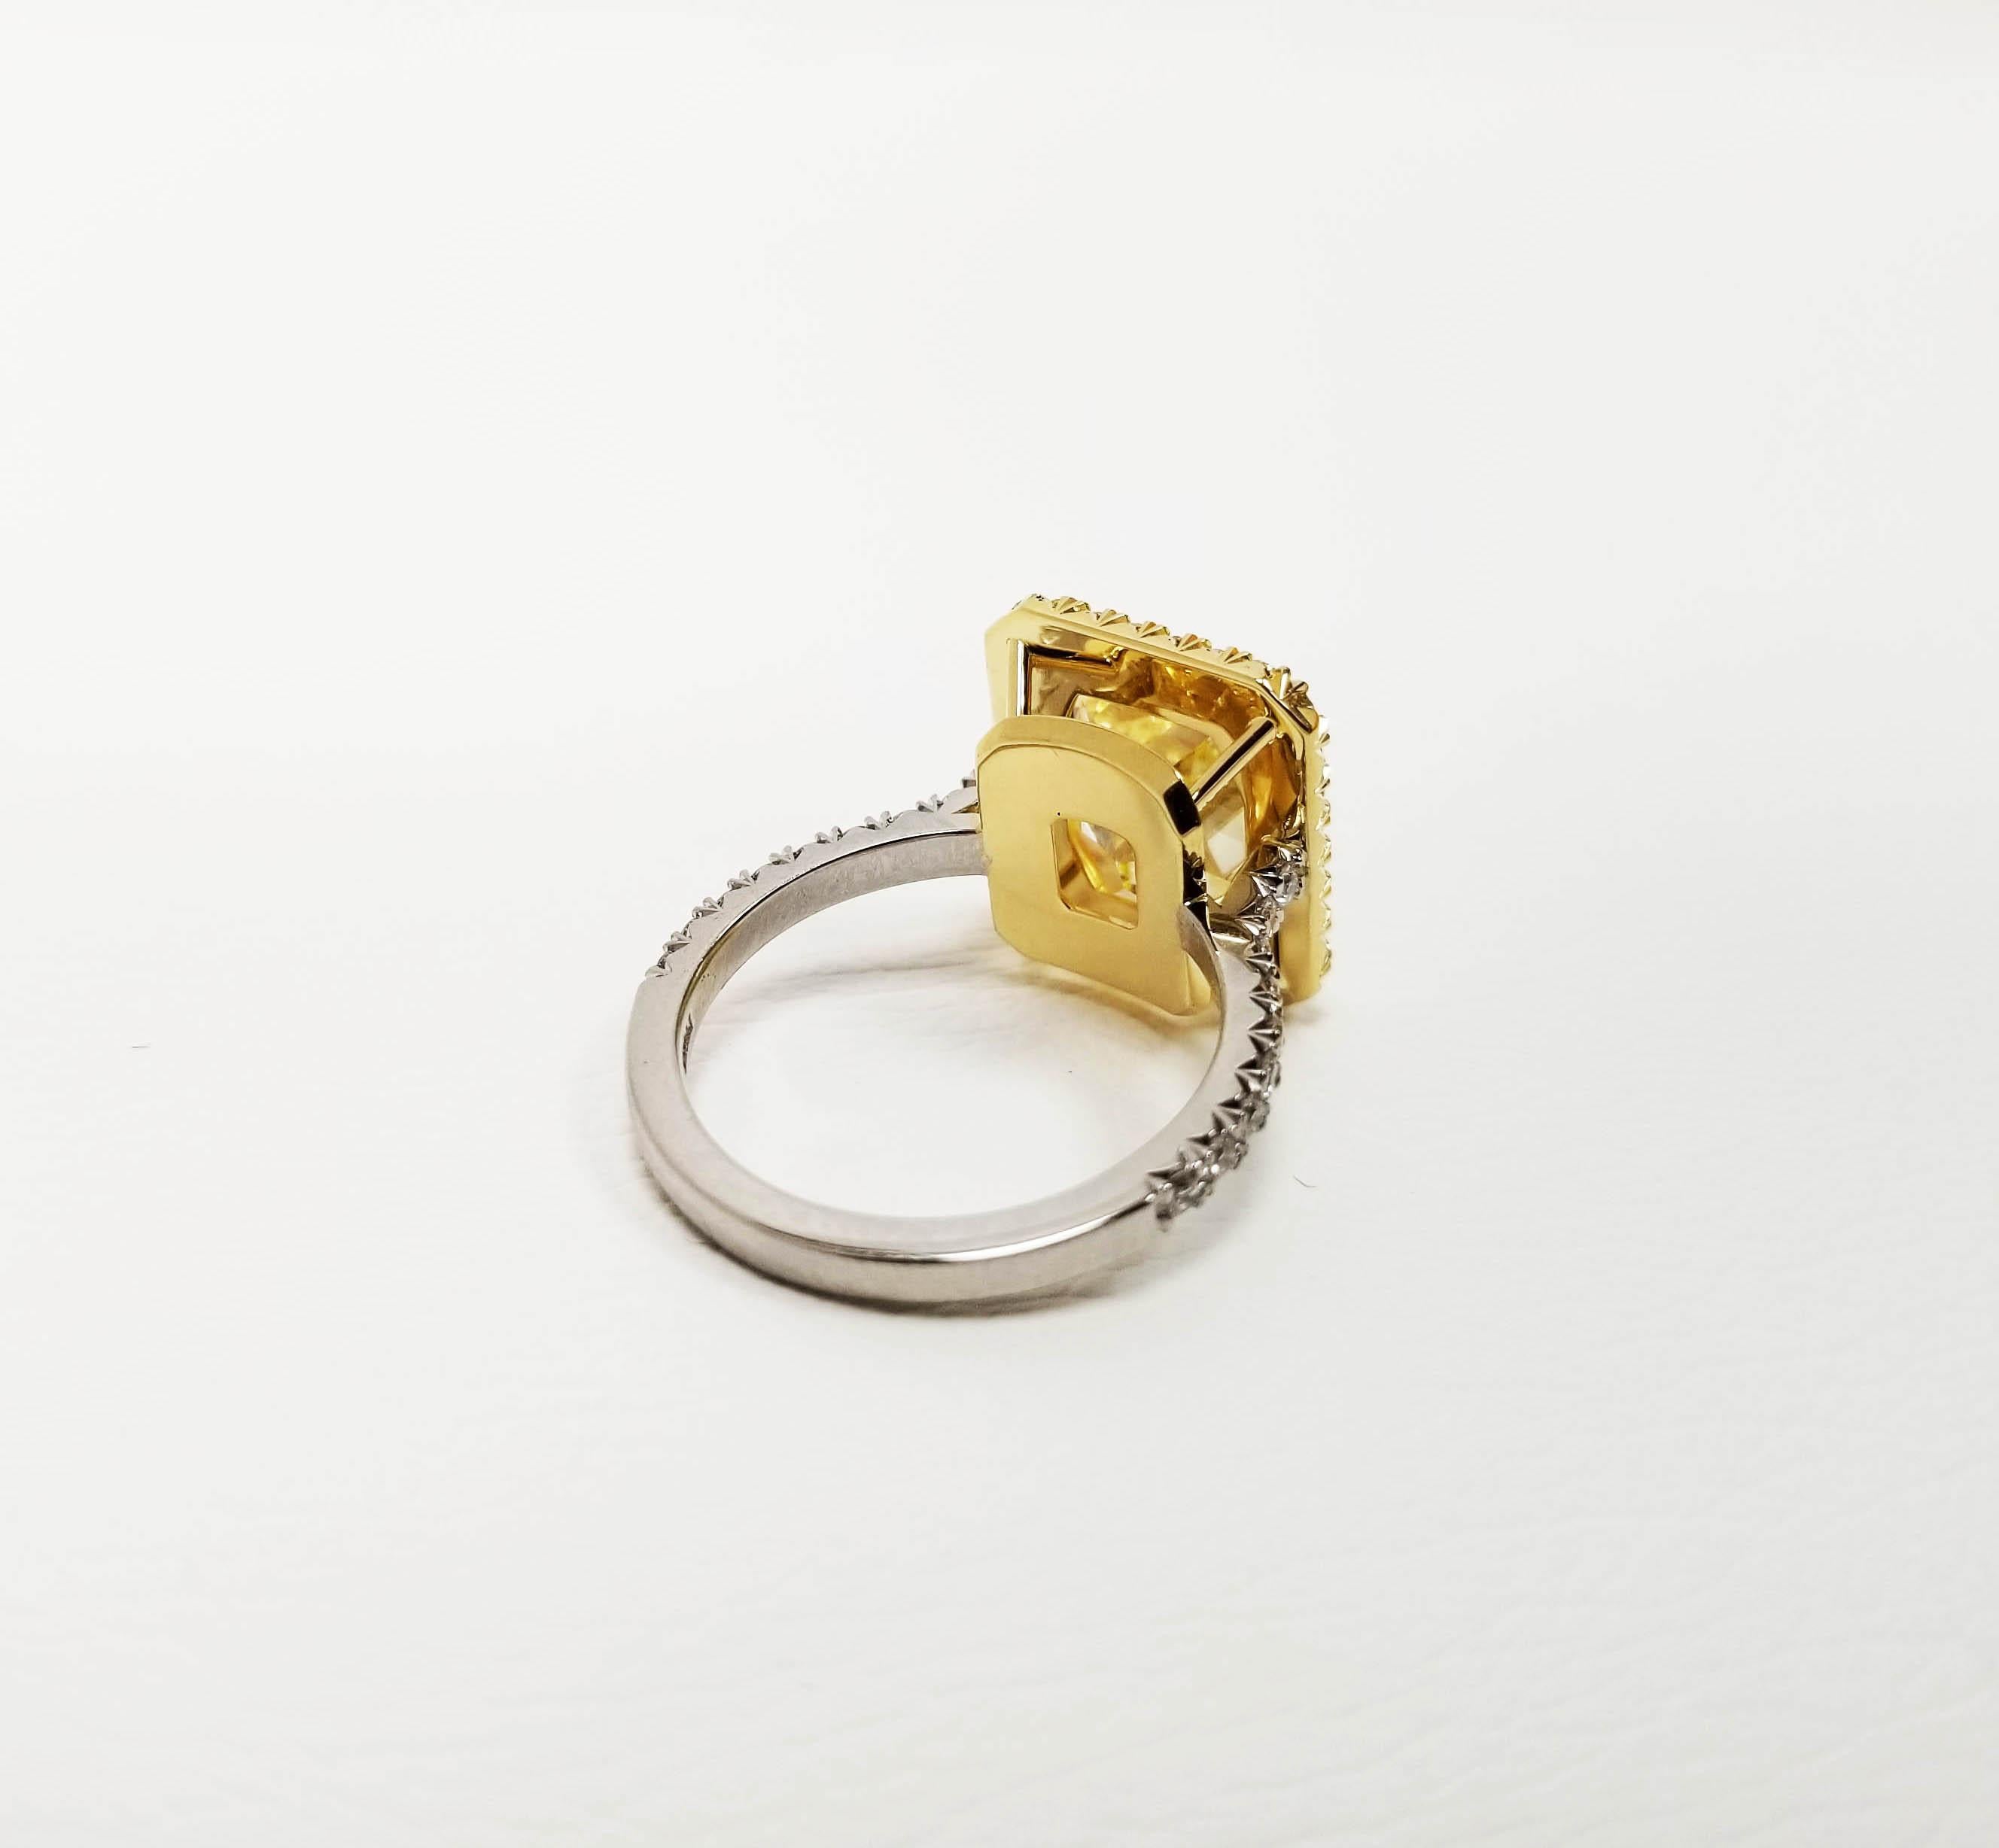 Scarselli 5 Carat Emerald Fancy Intense Yellow Diamond Engagement Ring GIA 2